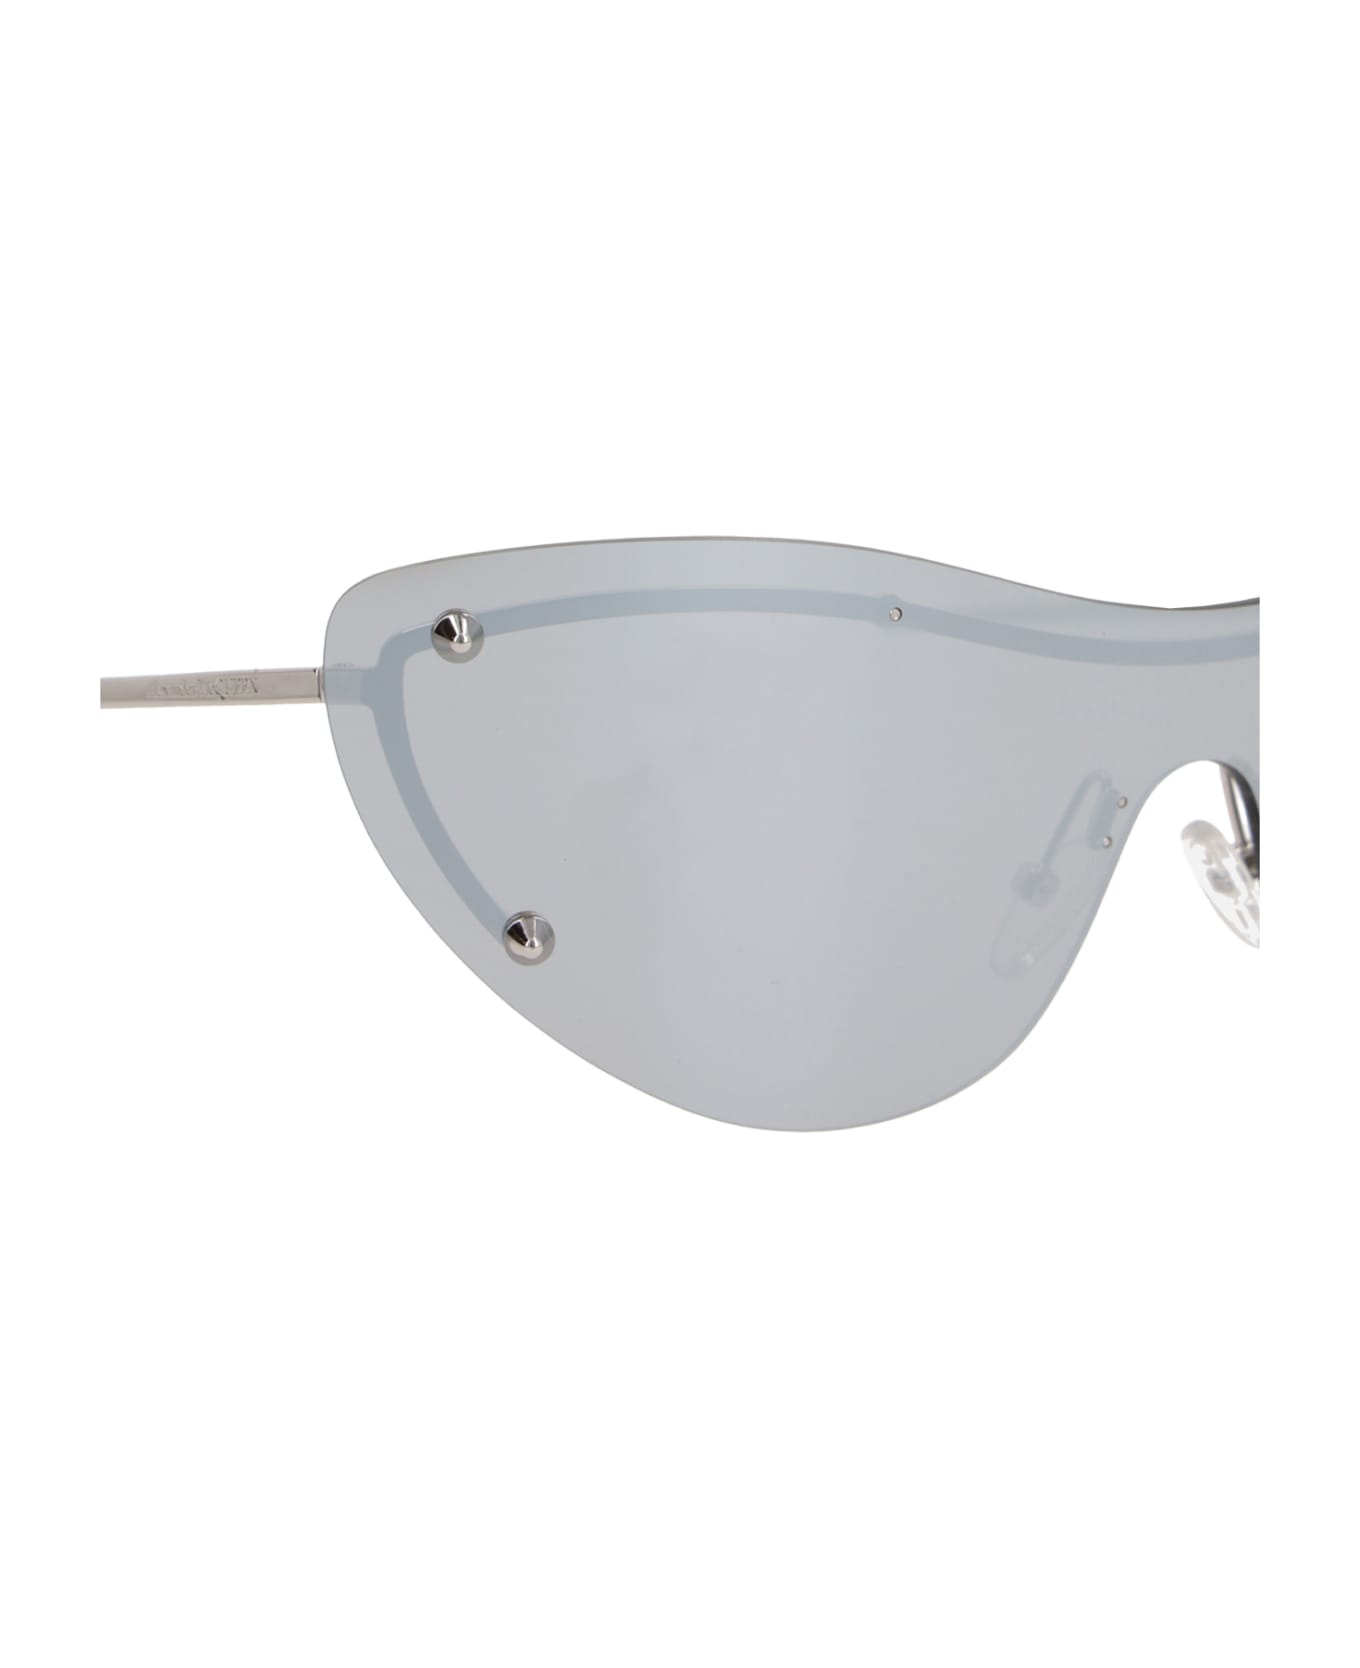 Alexander McQueen Eyewear Spike Studs Cat-eye Mask Sunglasses - Argento